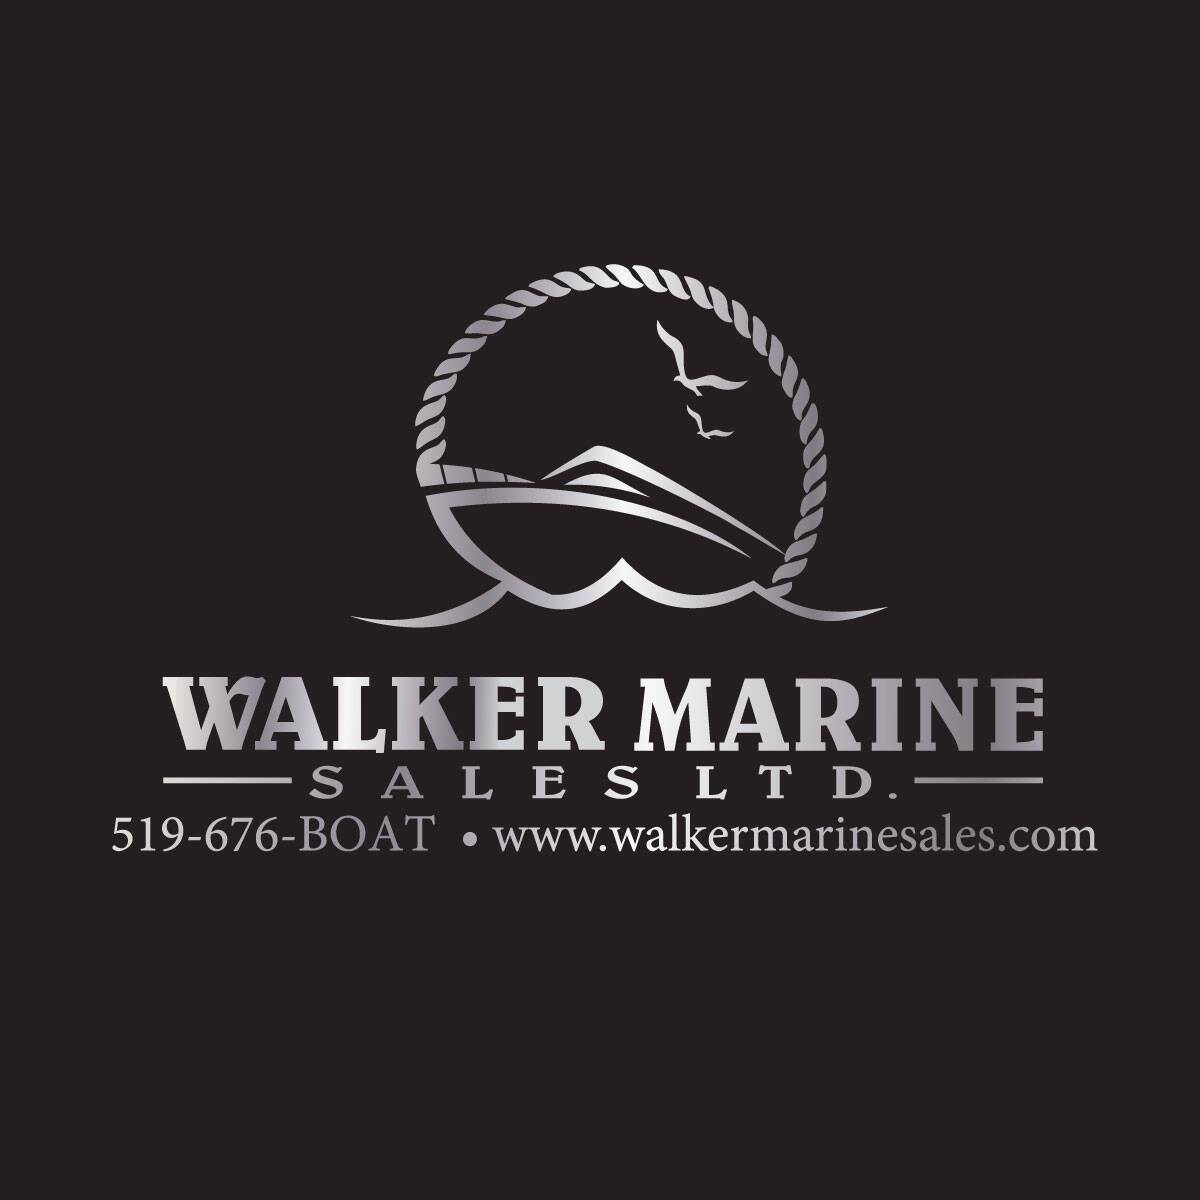 Walker Marine Sales Limited